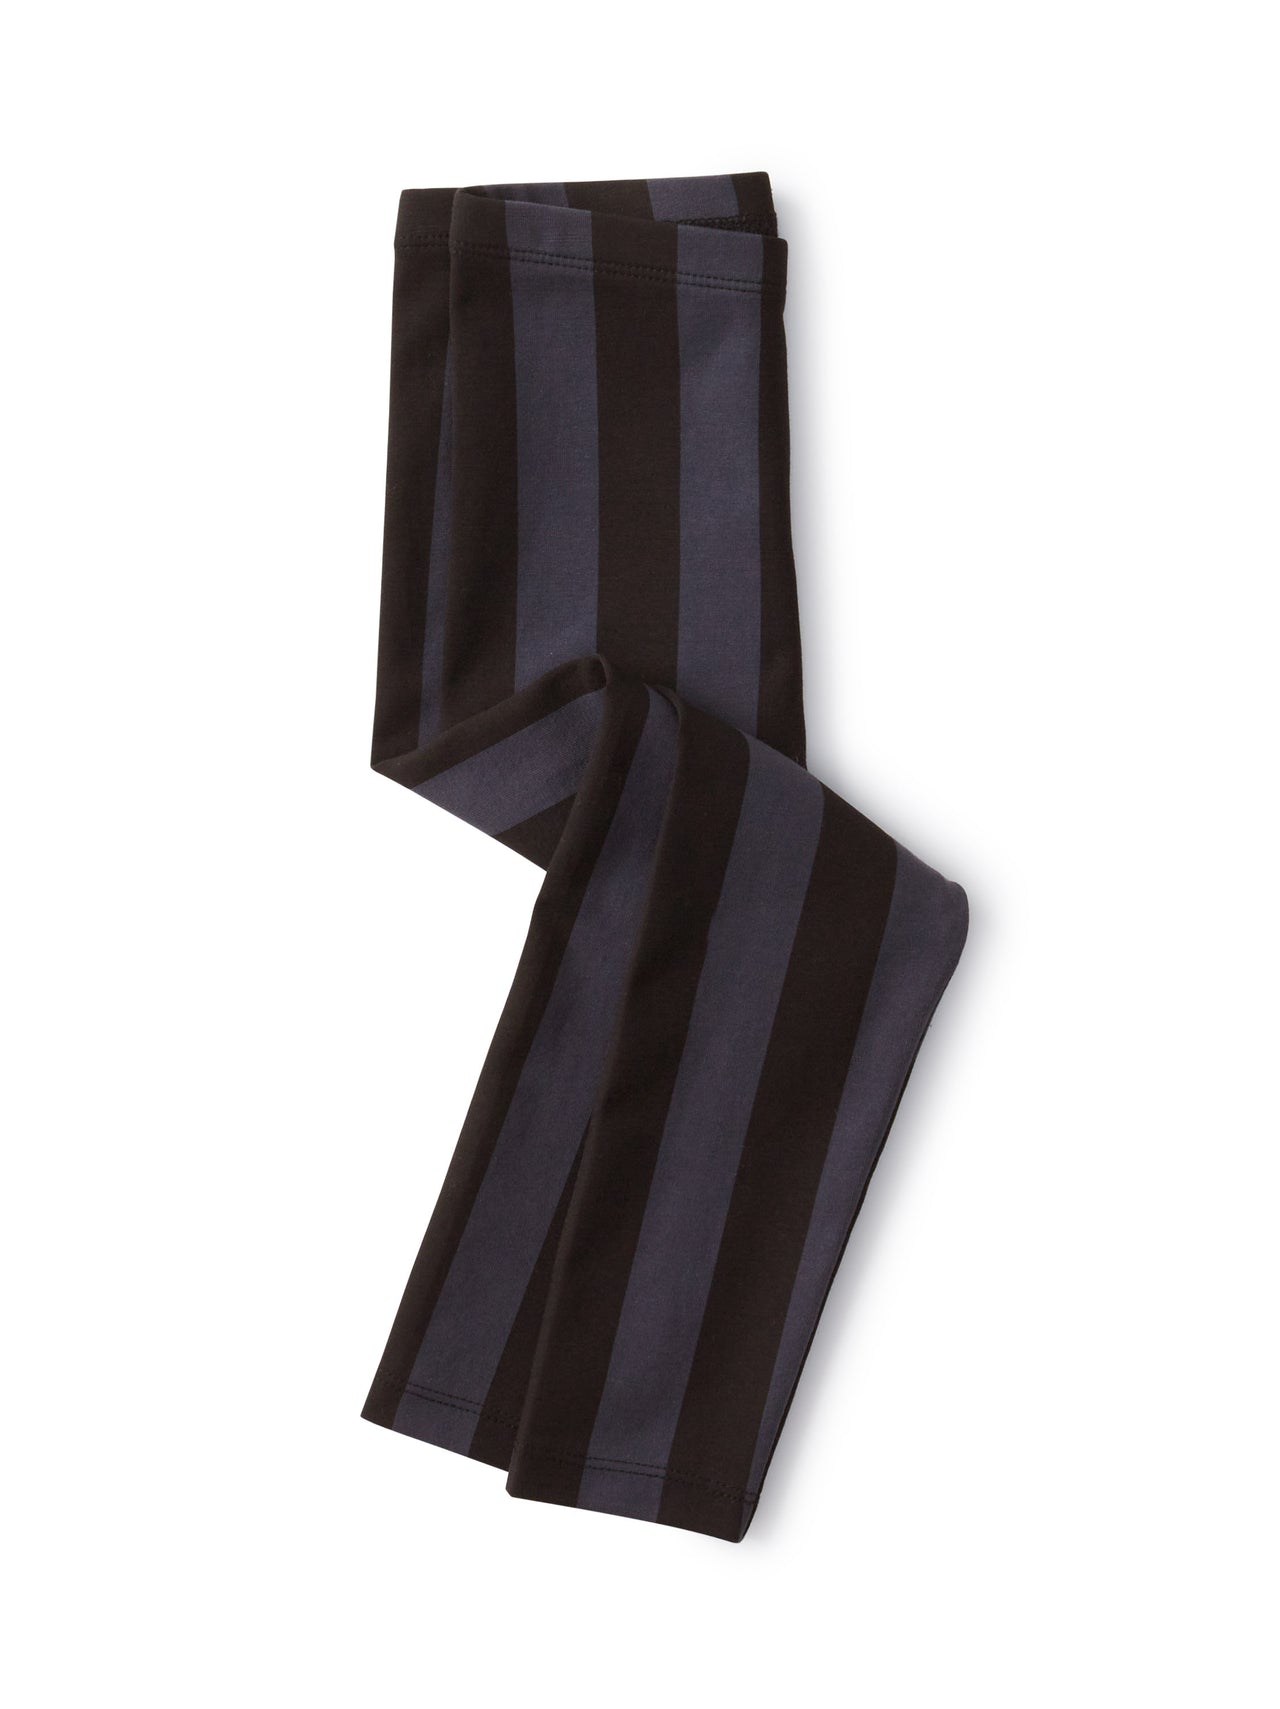 Printed Leggings- Subtle Stripes